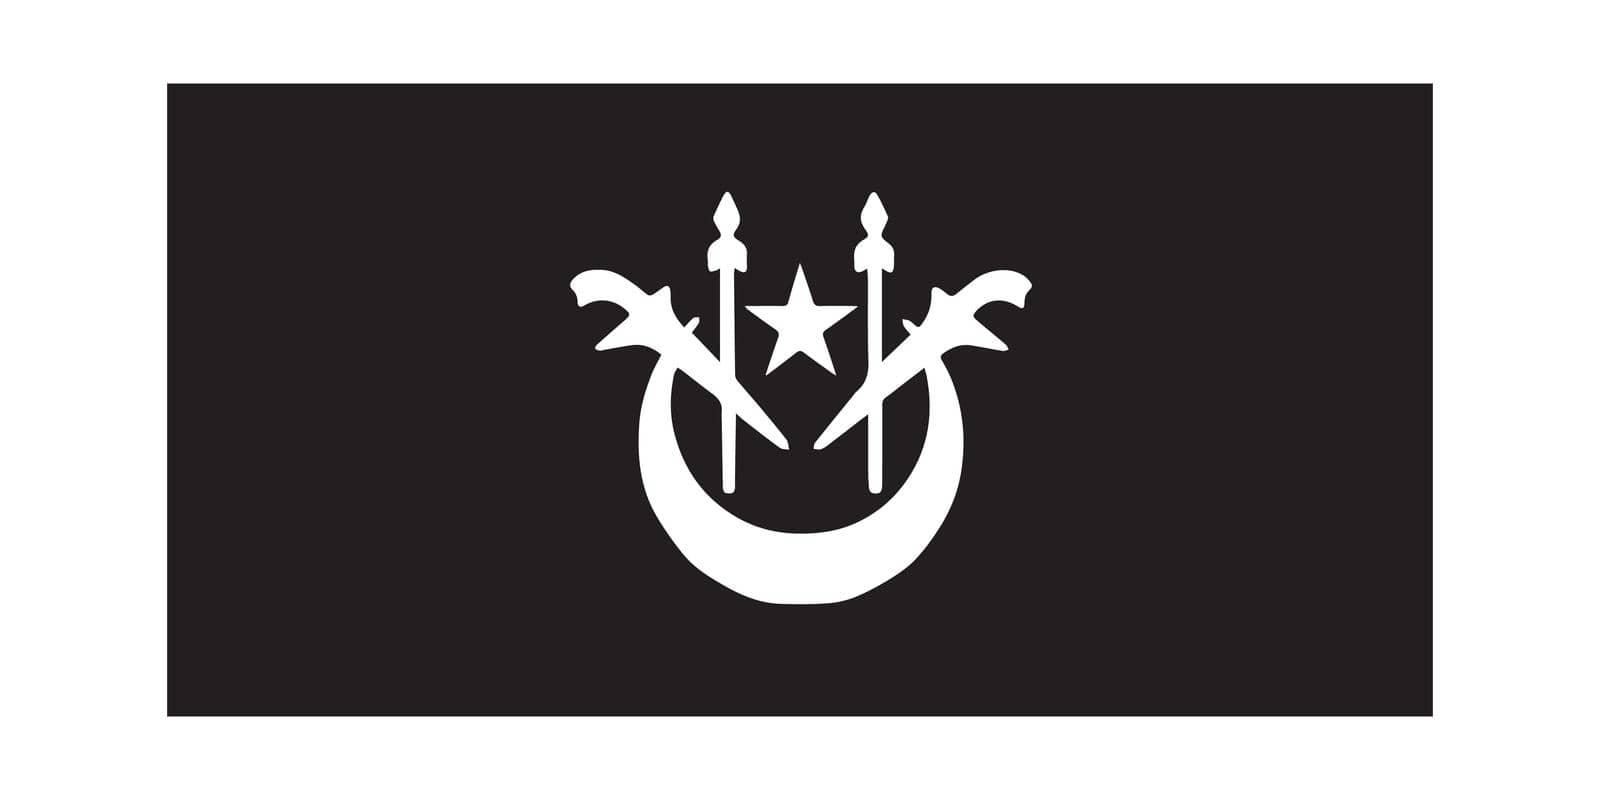 Flag of Kelantan State Malaysia. Kelantan Darul Naim State Flag Australia. Black and white EPS Vector File. by xileodesigns